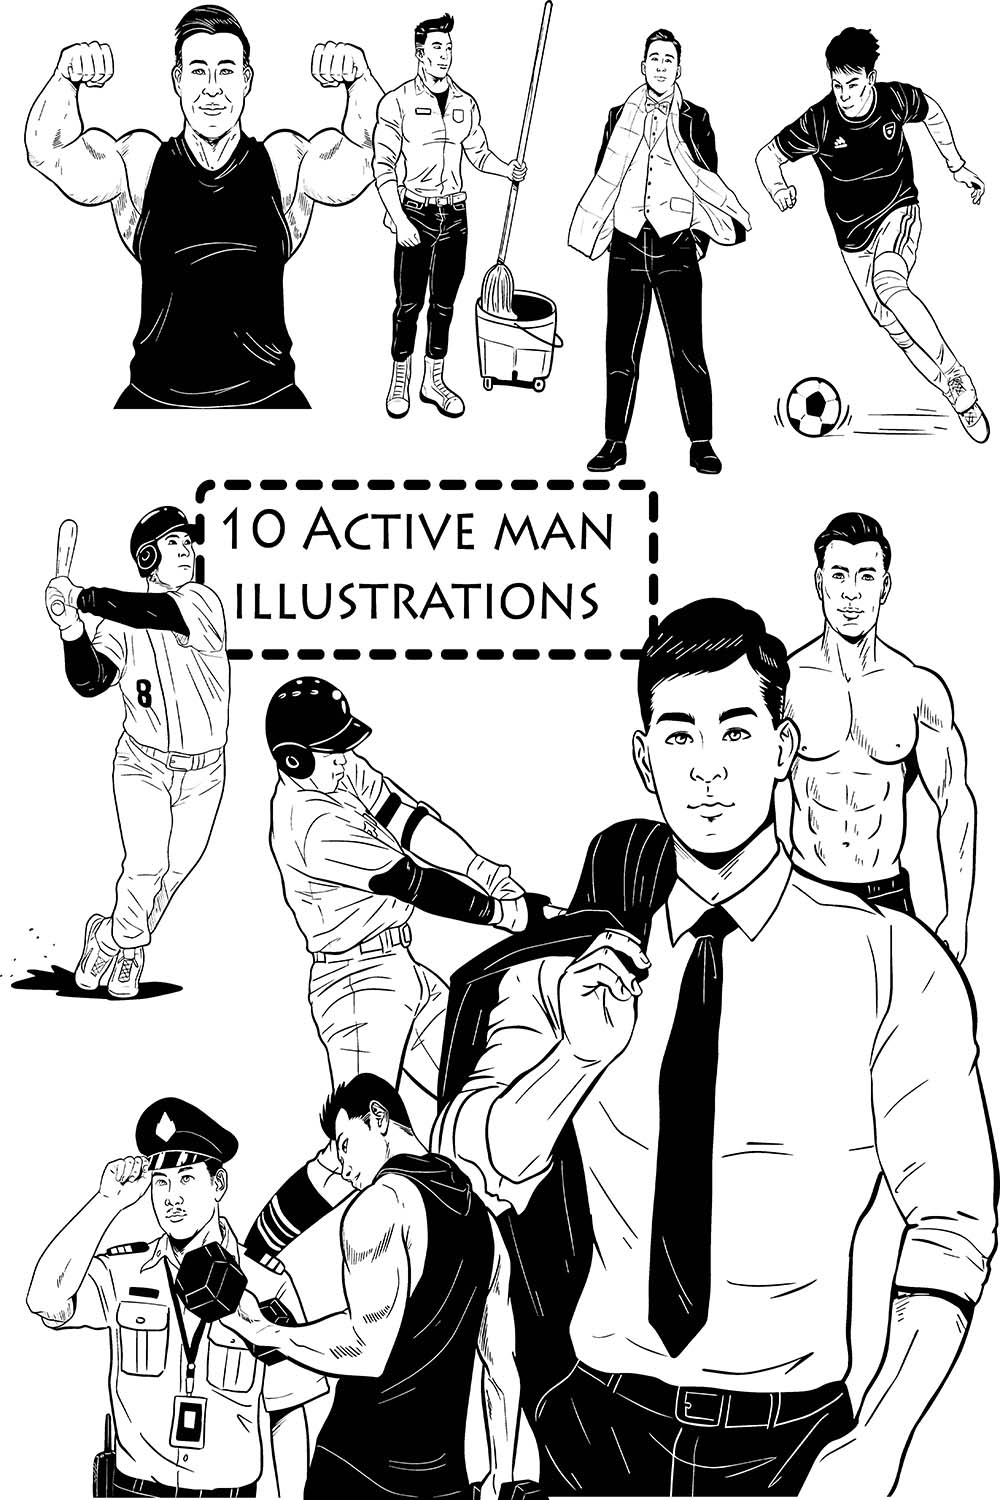 Active Man Illustrations.